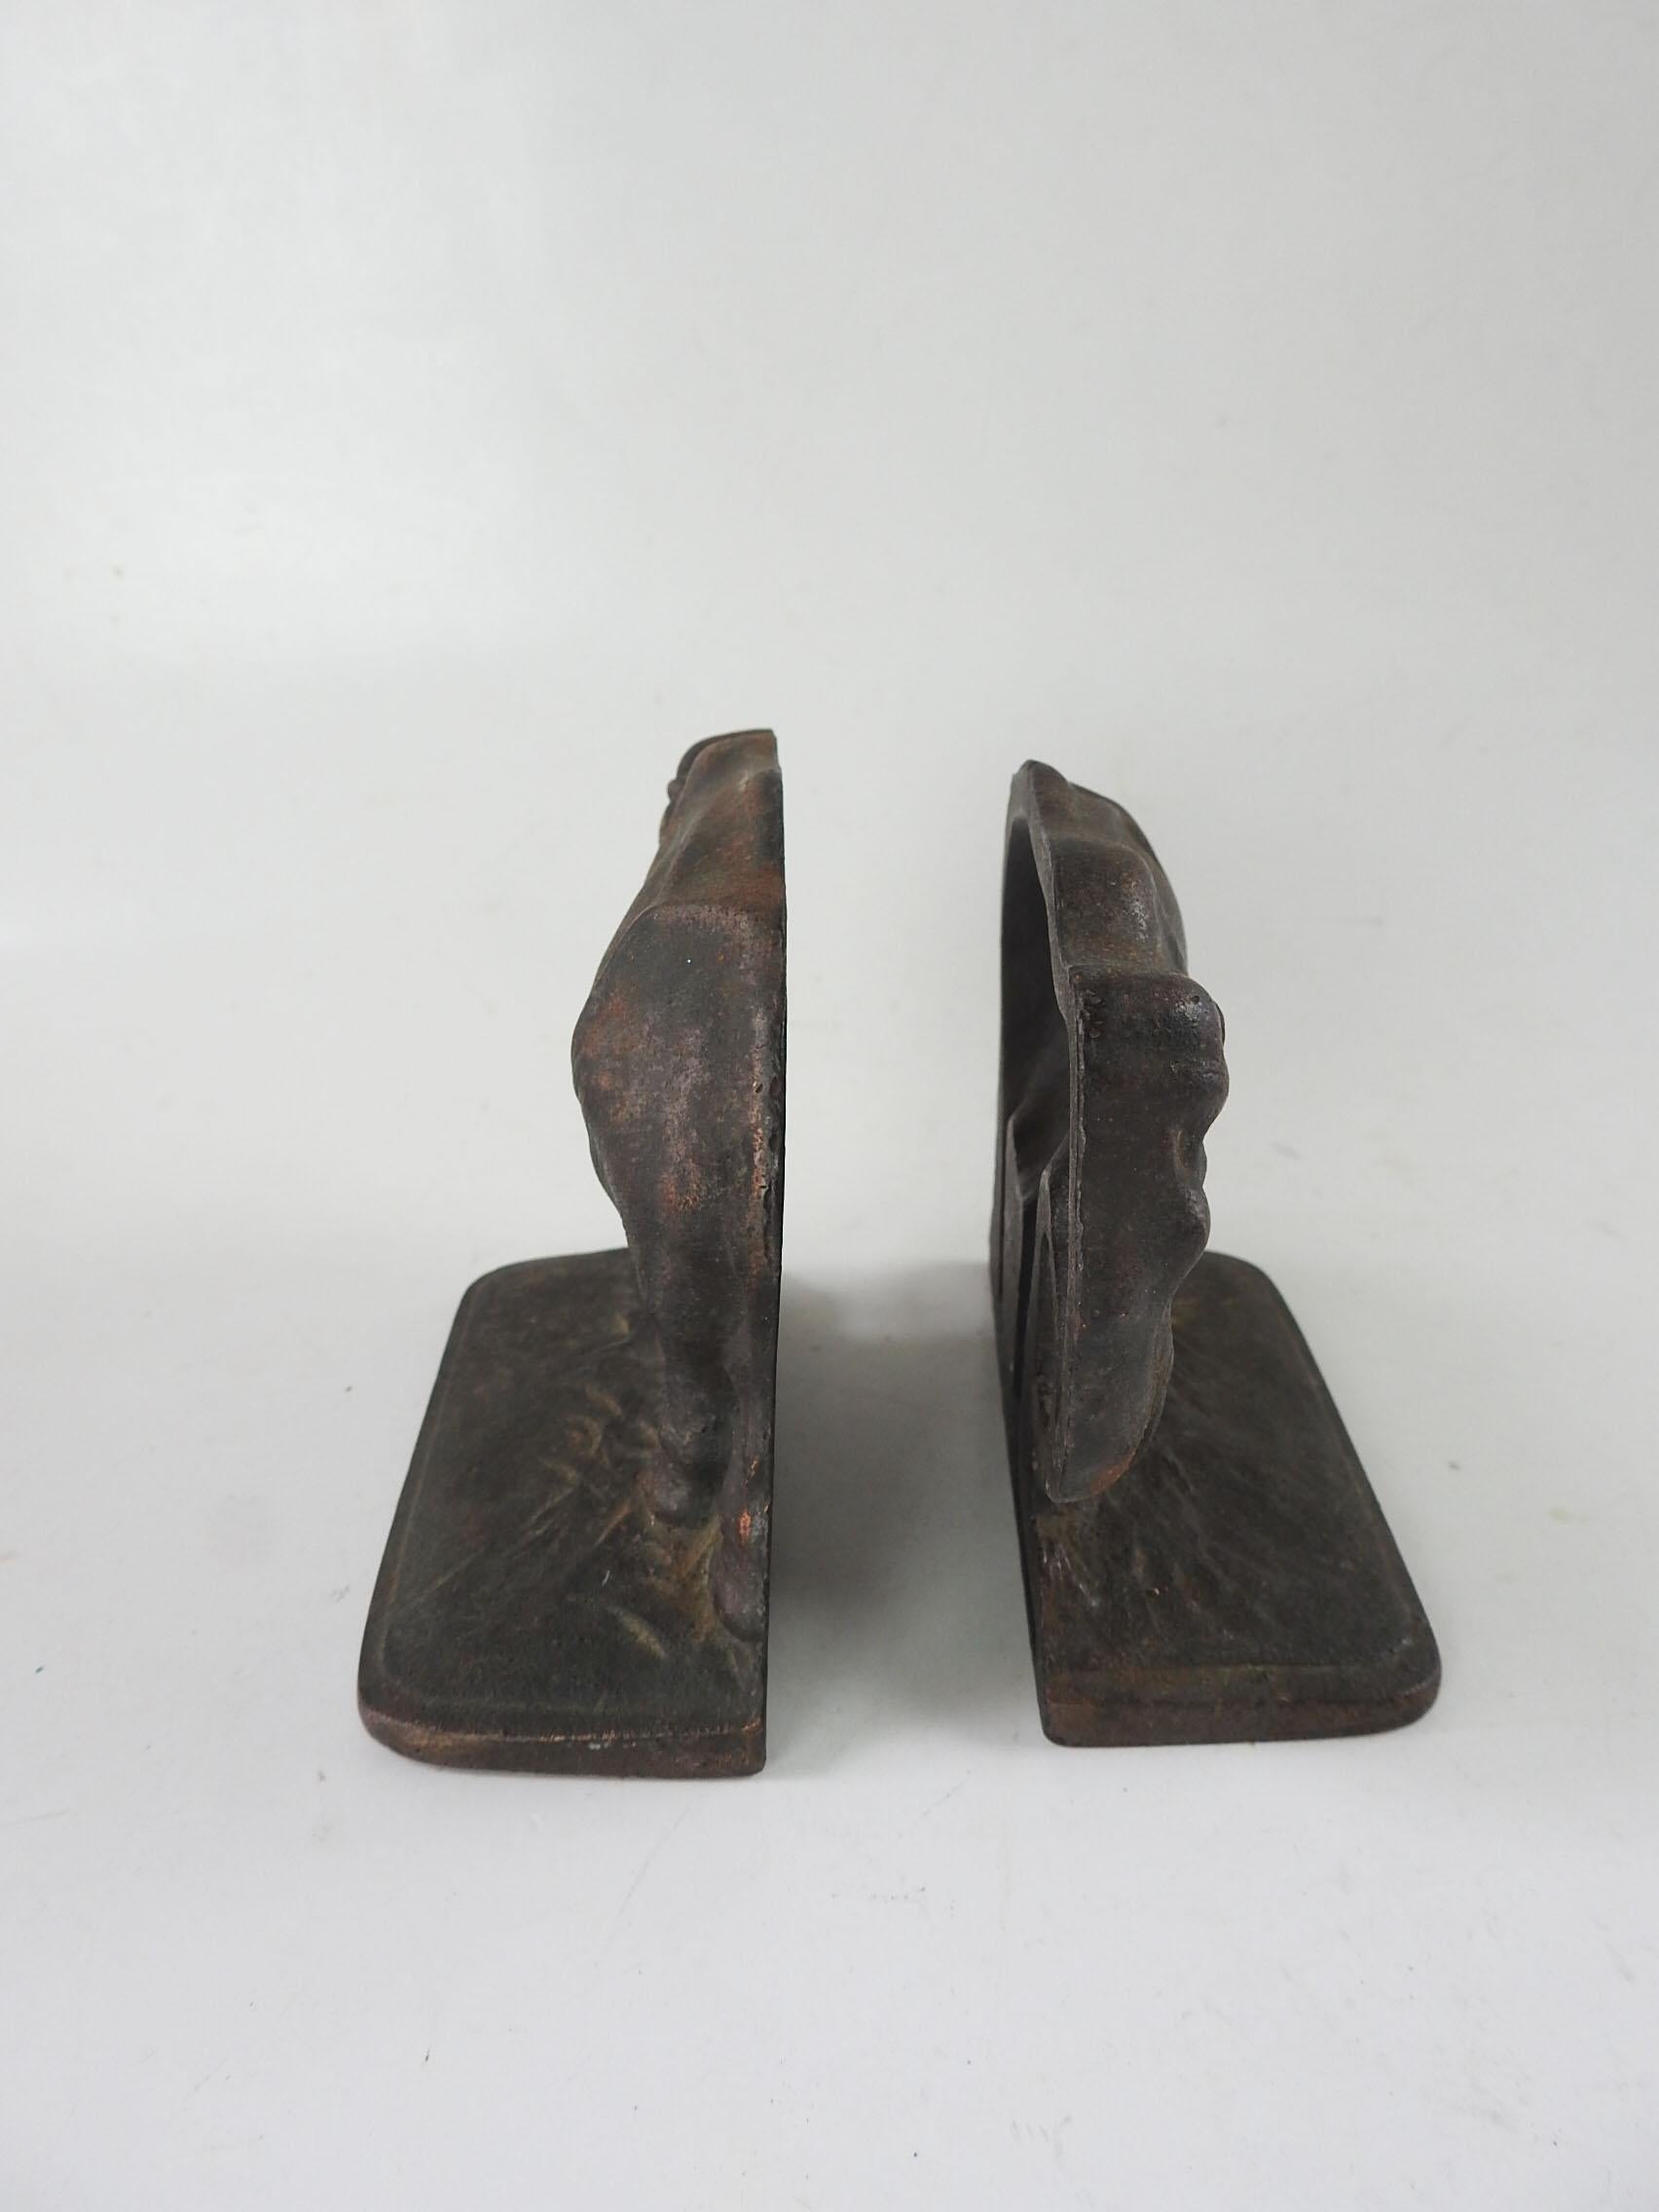 cast iron figurines